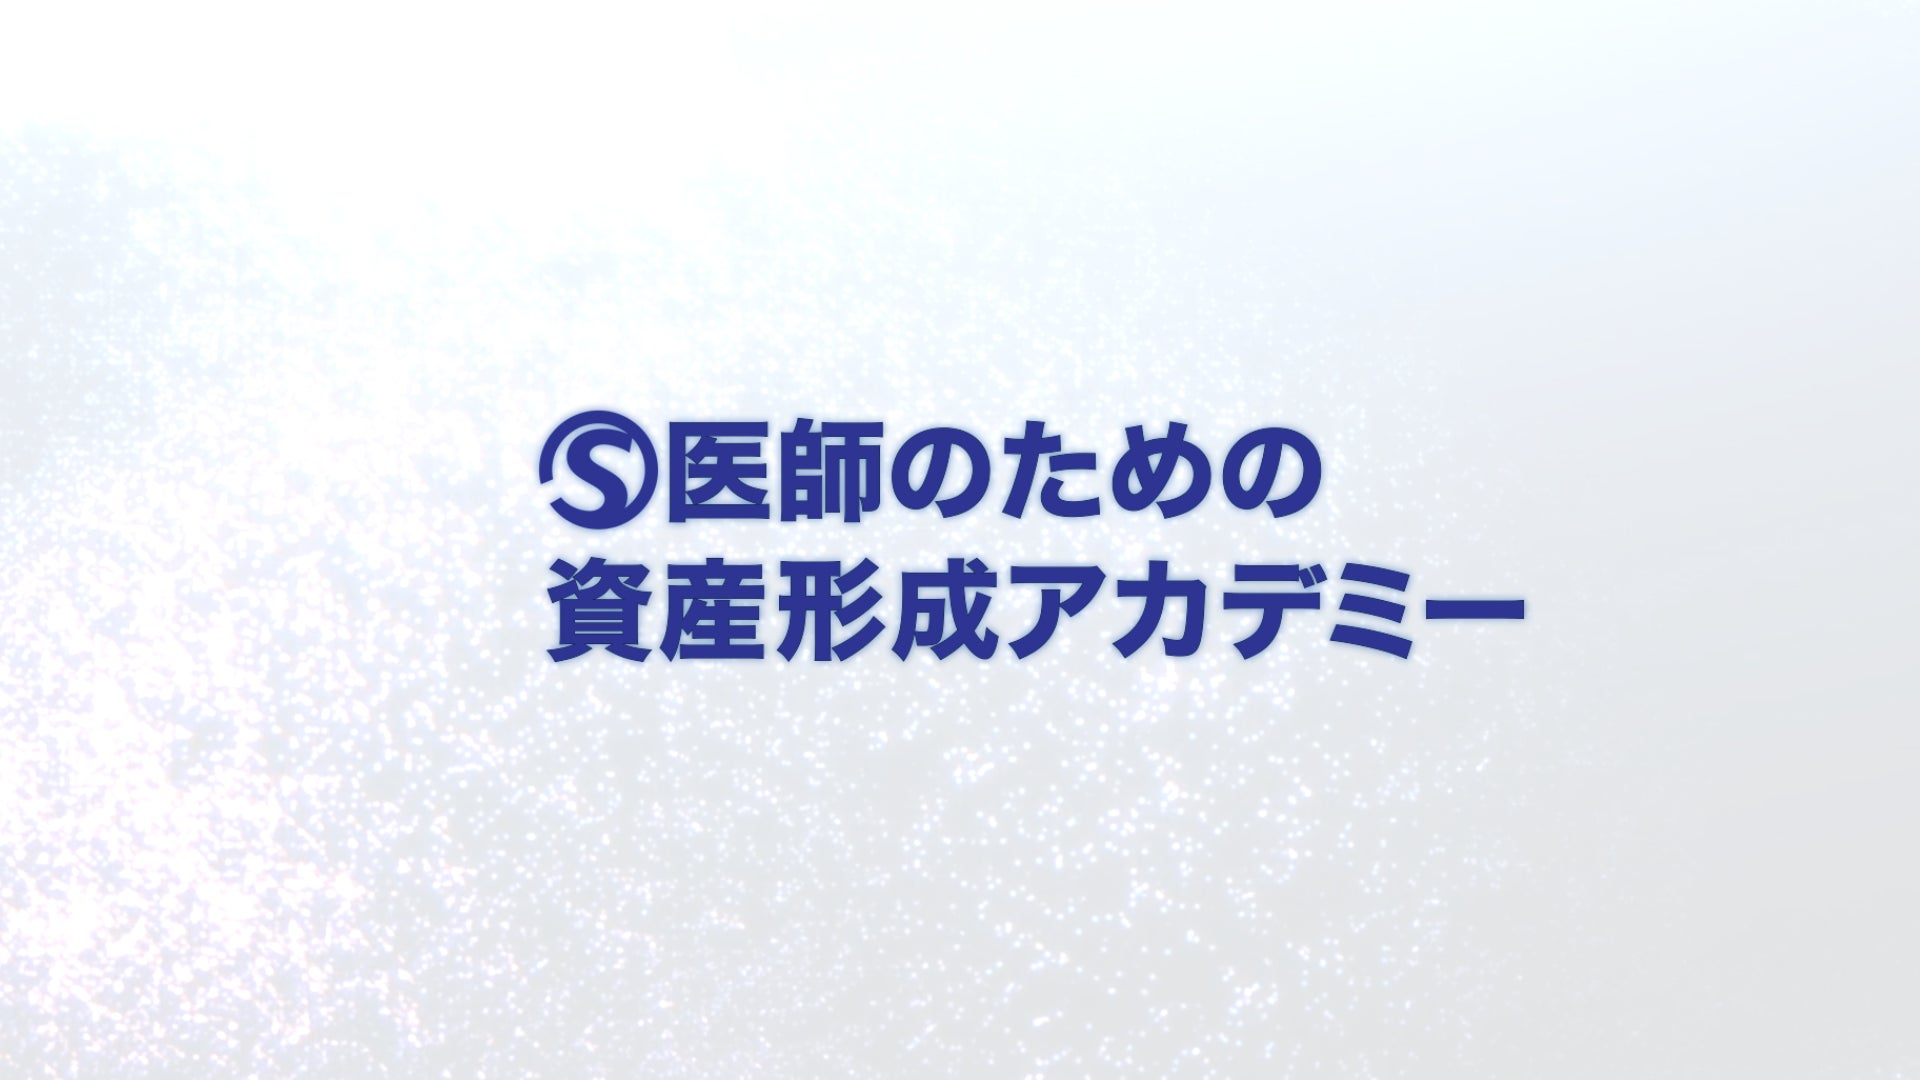 「JCB presentsユニバーサル・スタジオ・ジャパン ハロウィーン貸切キャンペーン 2023」を開始